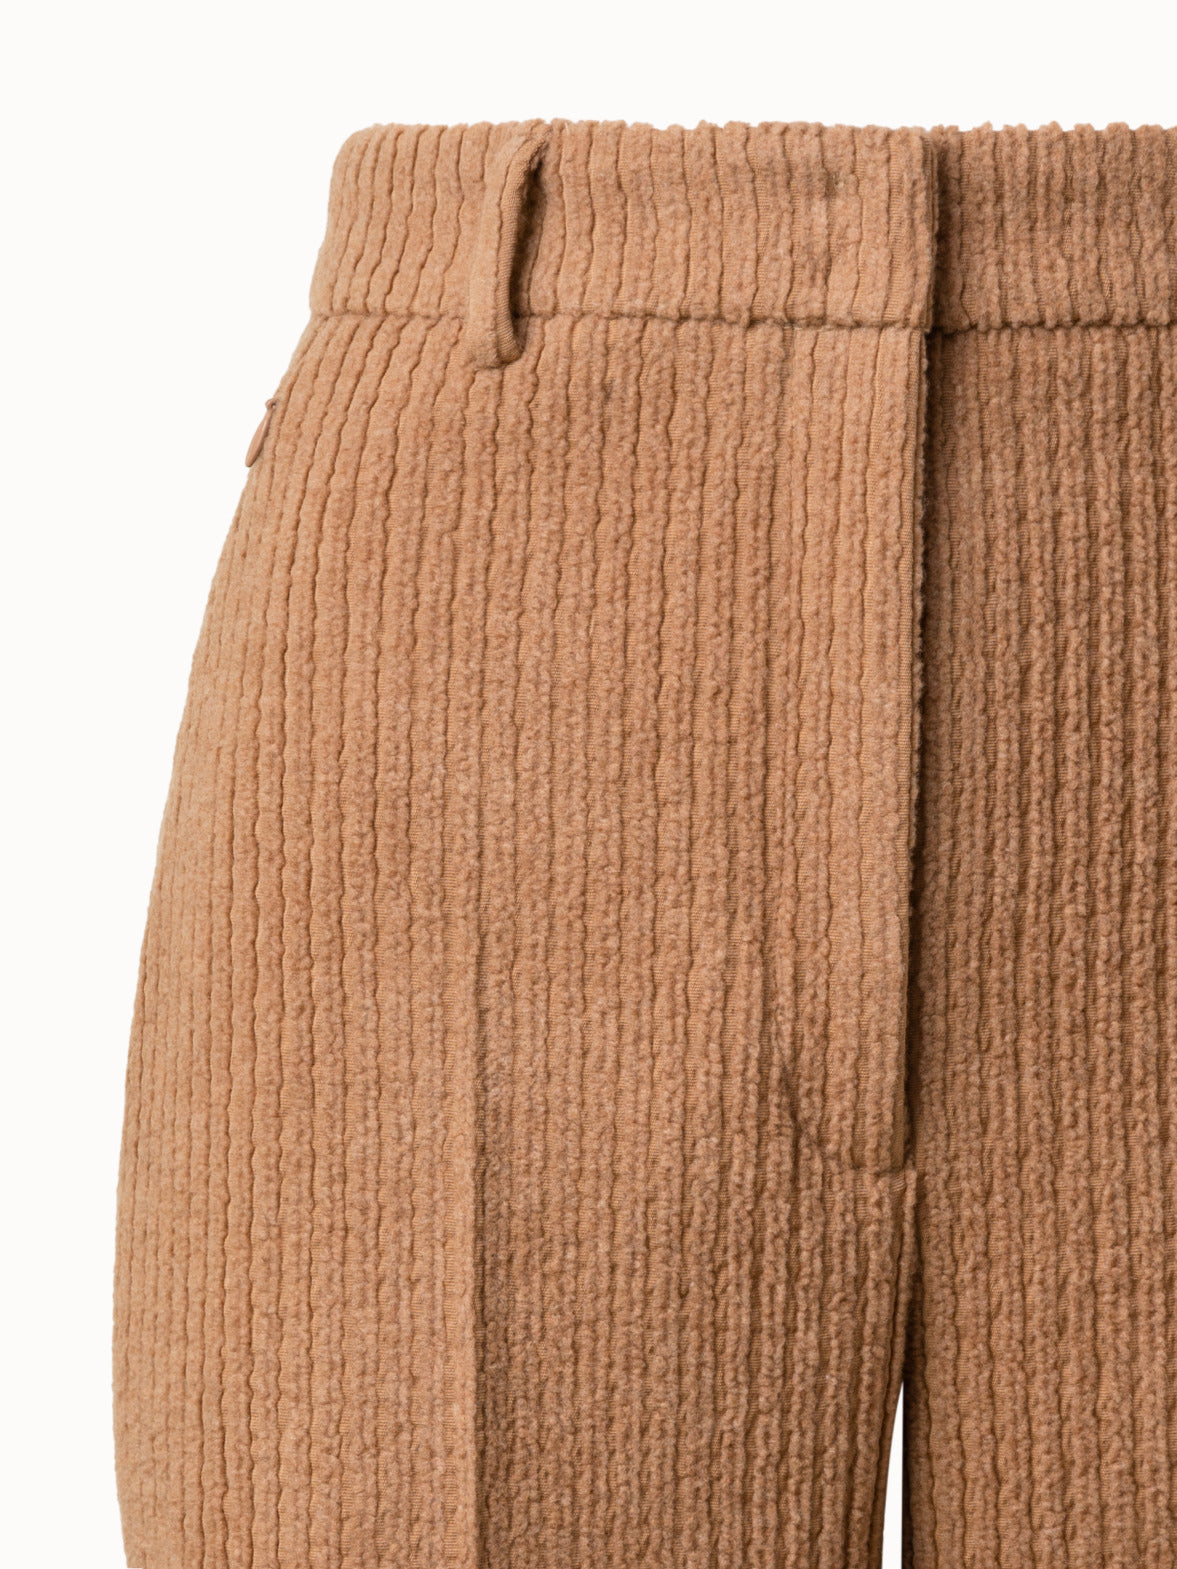 Wool Cashmere Velvet Corduroy Bootcut Pants